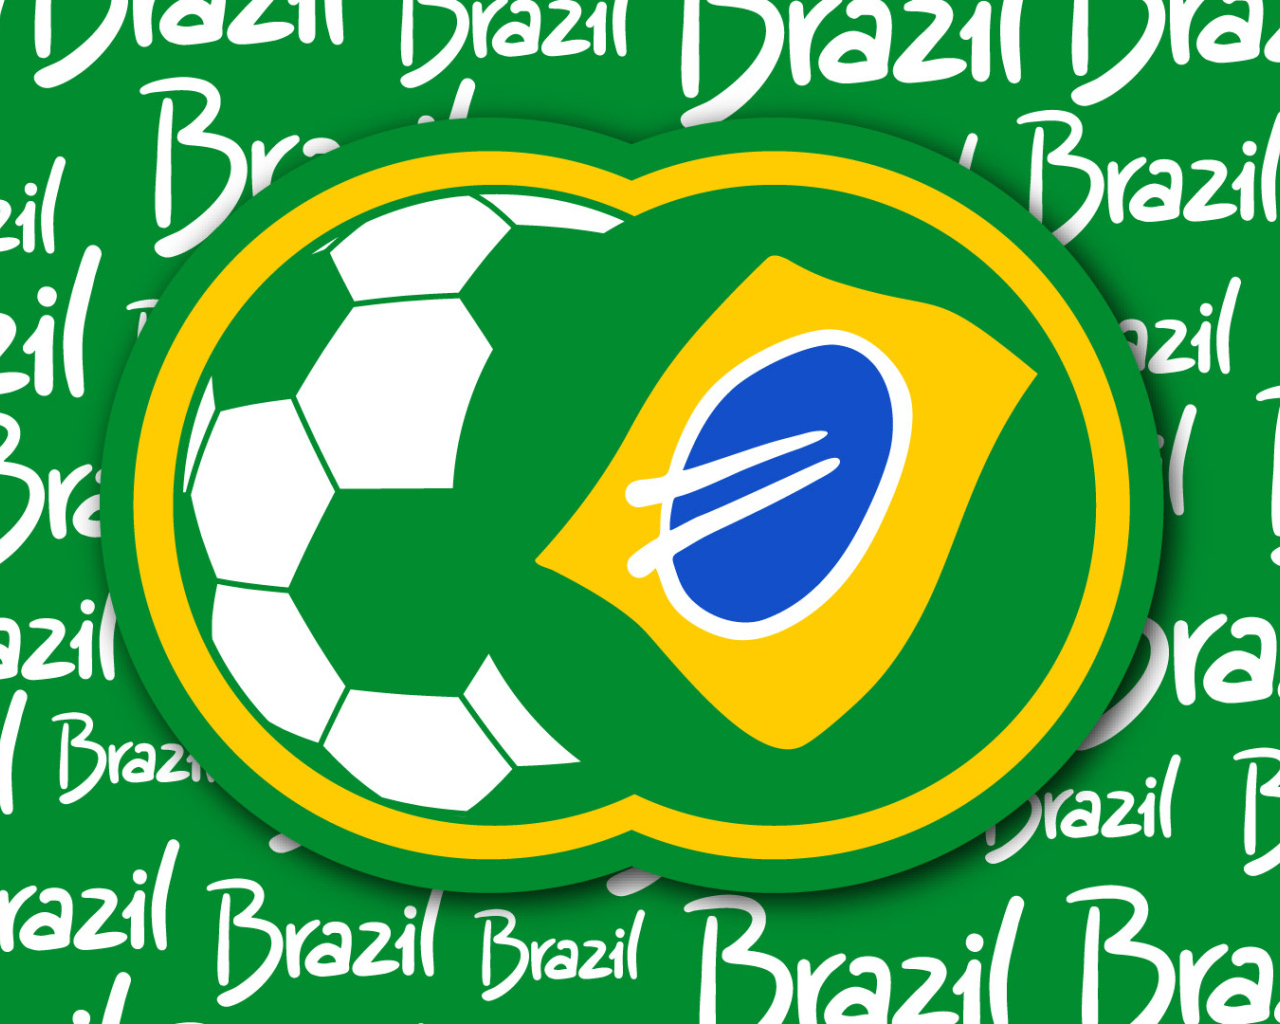 Обои на рабочий стол на Чемпионате мира по футболу в Бразилии 2014